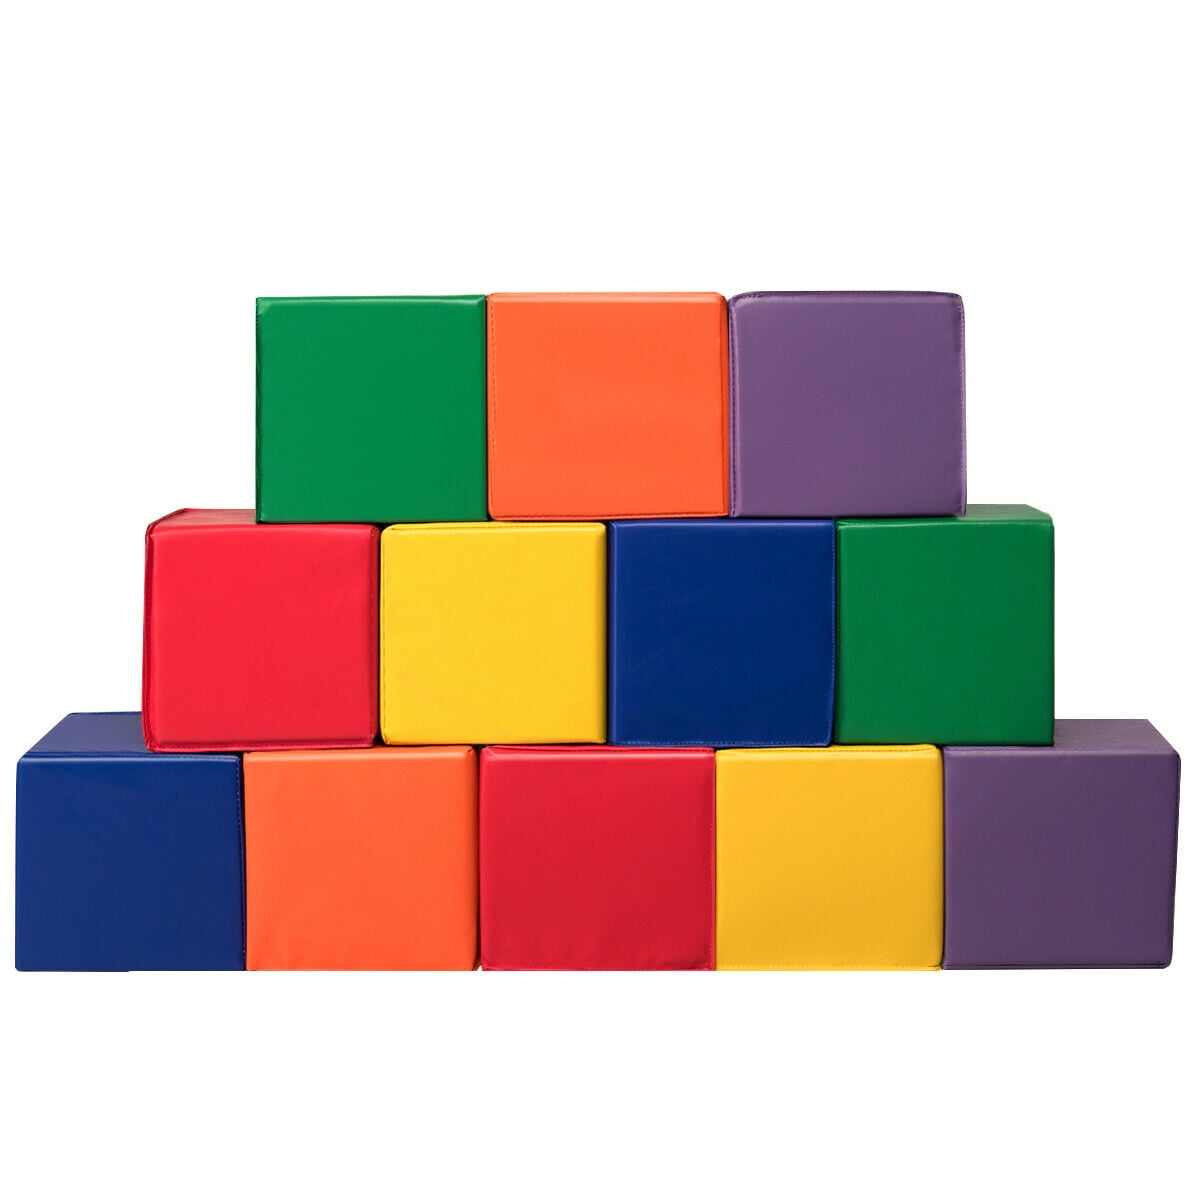 childrens large foam building blocks